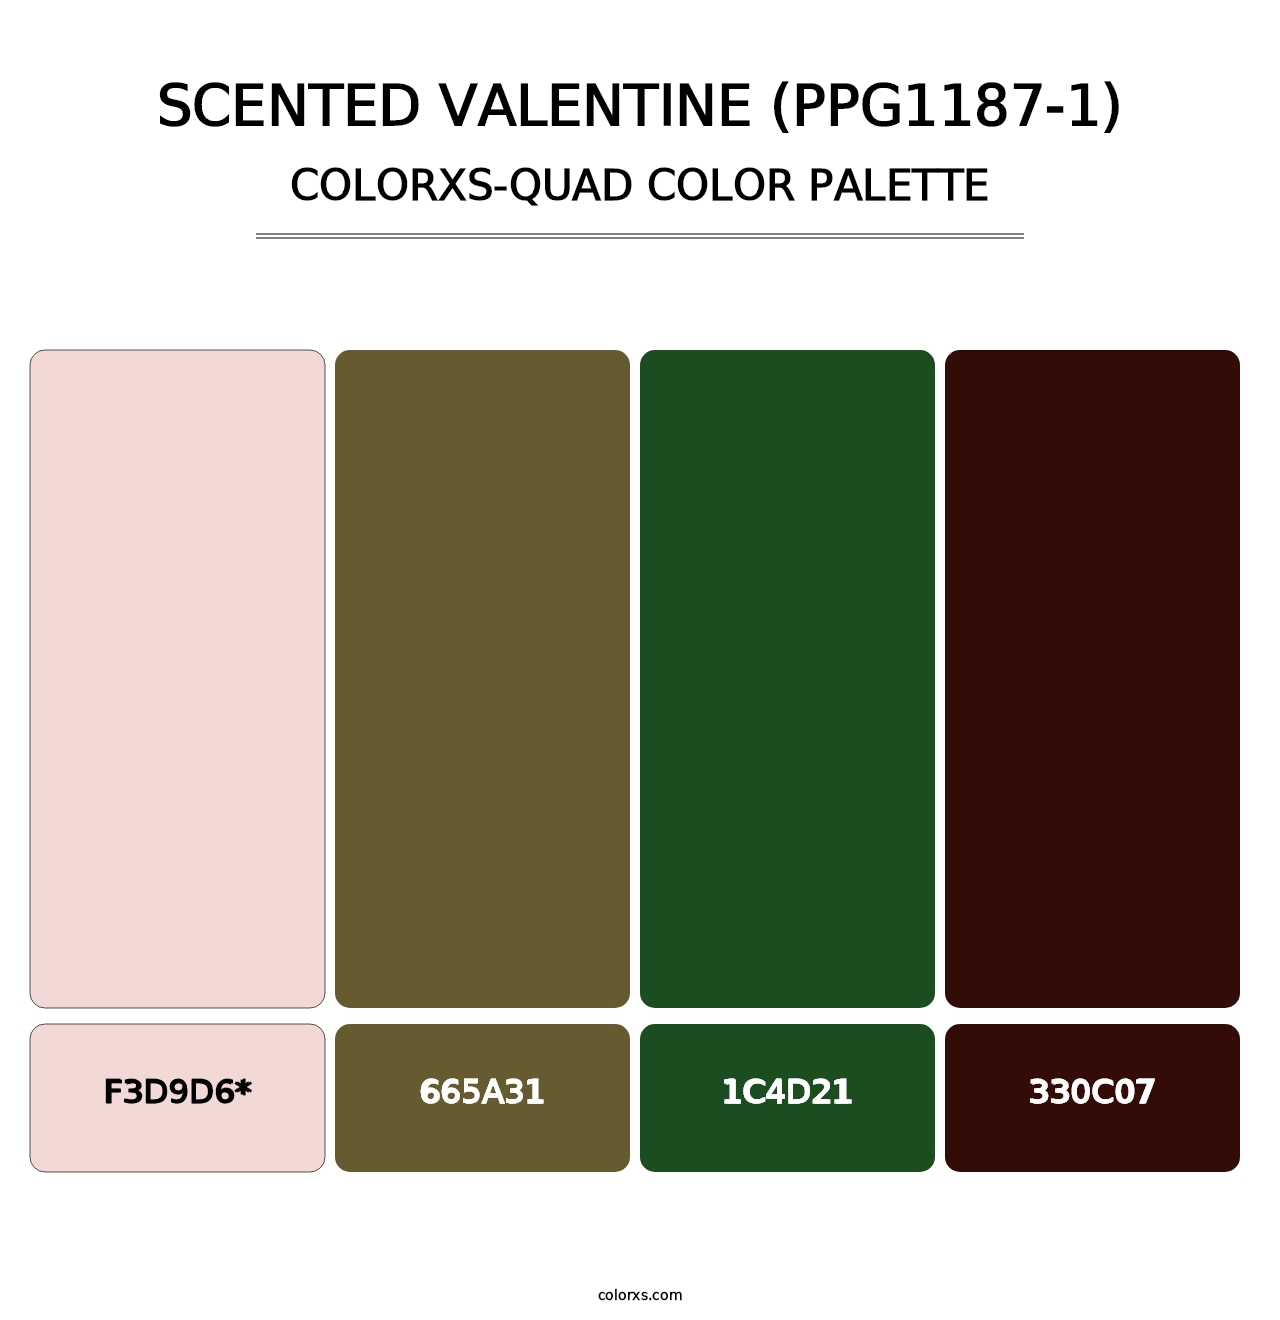 Scented Valentine (PPG1187-1) - Colorxs Quad Palette